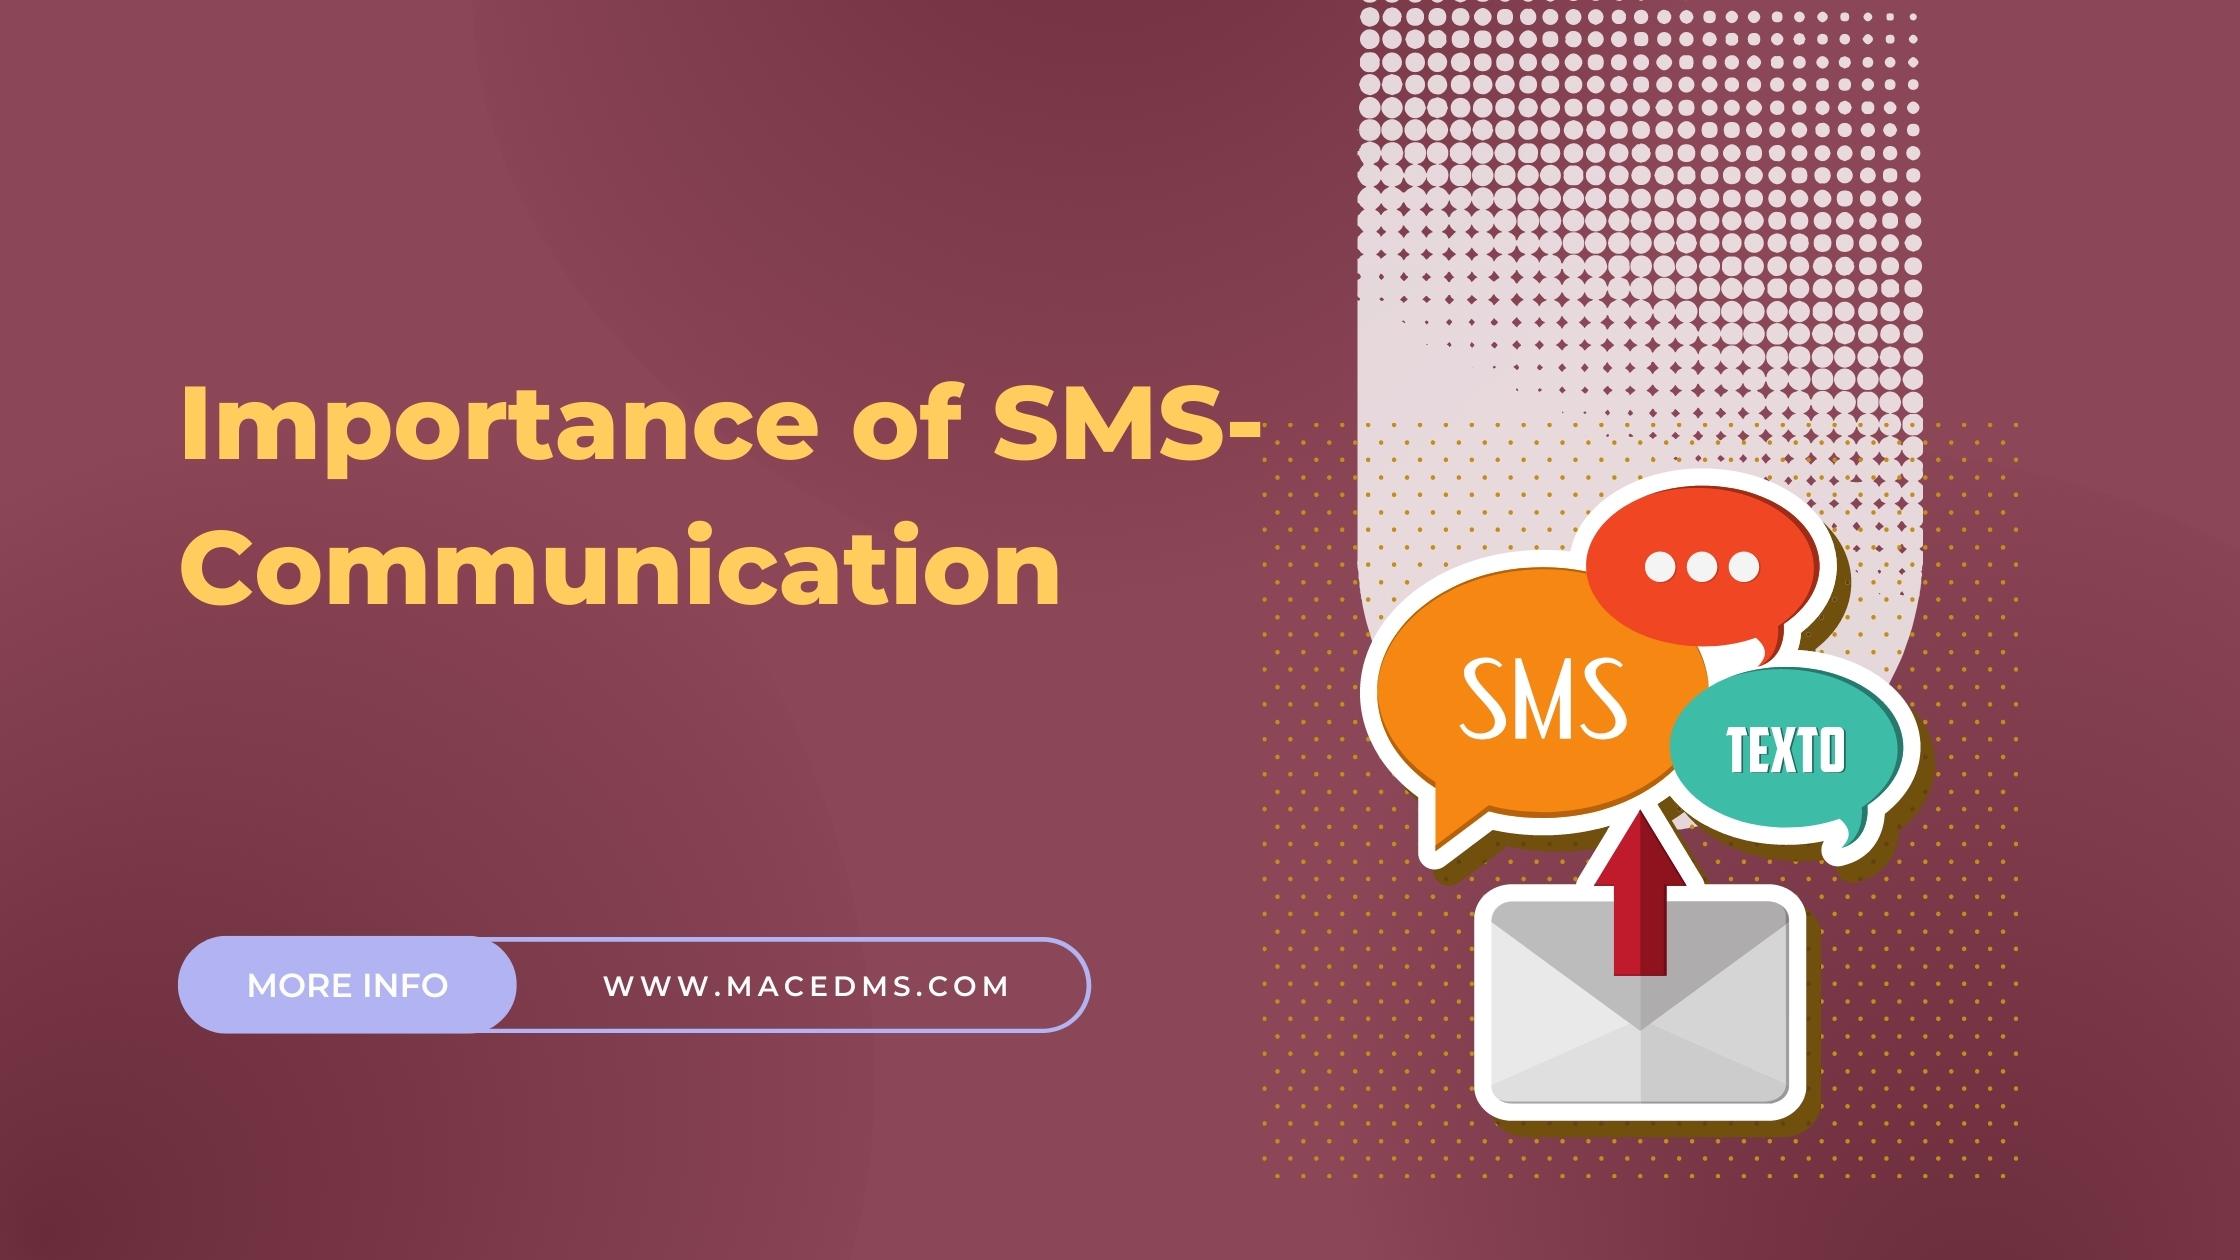 SMS- Communication